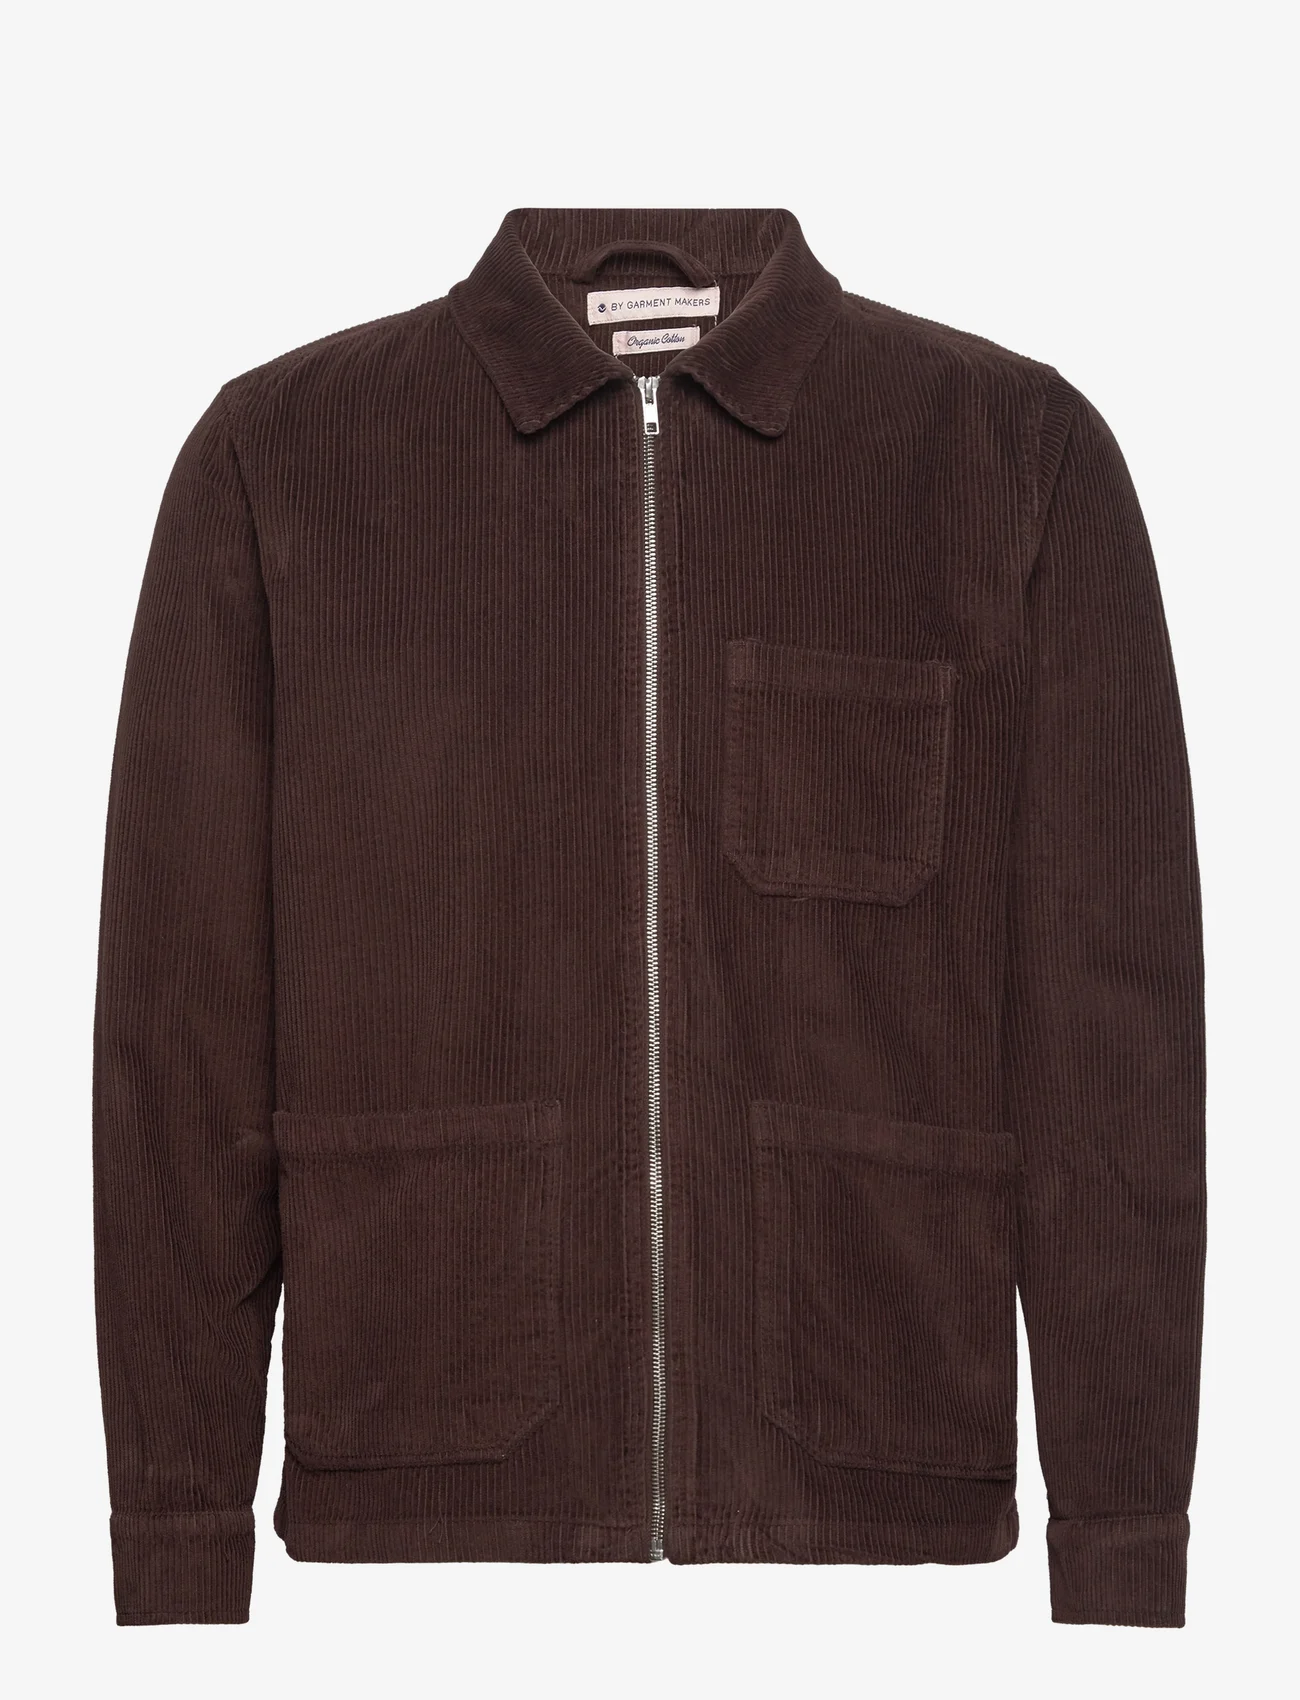 By Garment Makers - Matt Corduroy Jacket GOTS - 3000 ebony brown - 0